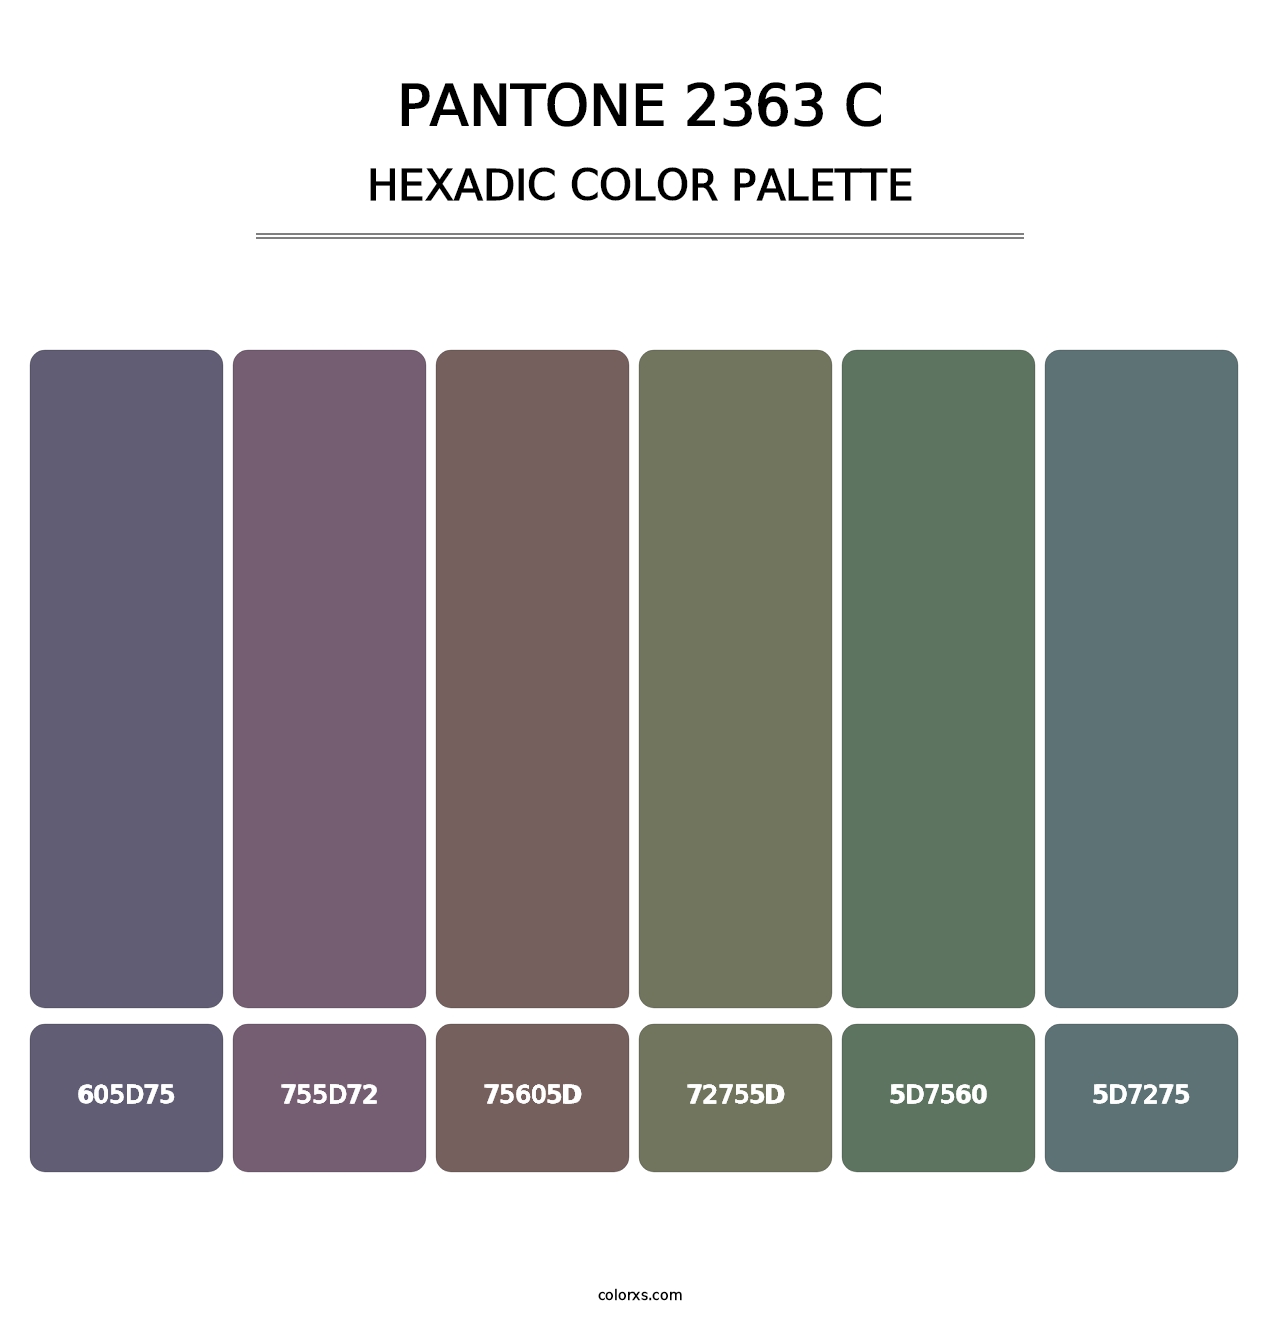 PANTONE 2363 C - Hexadic Color Palette